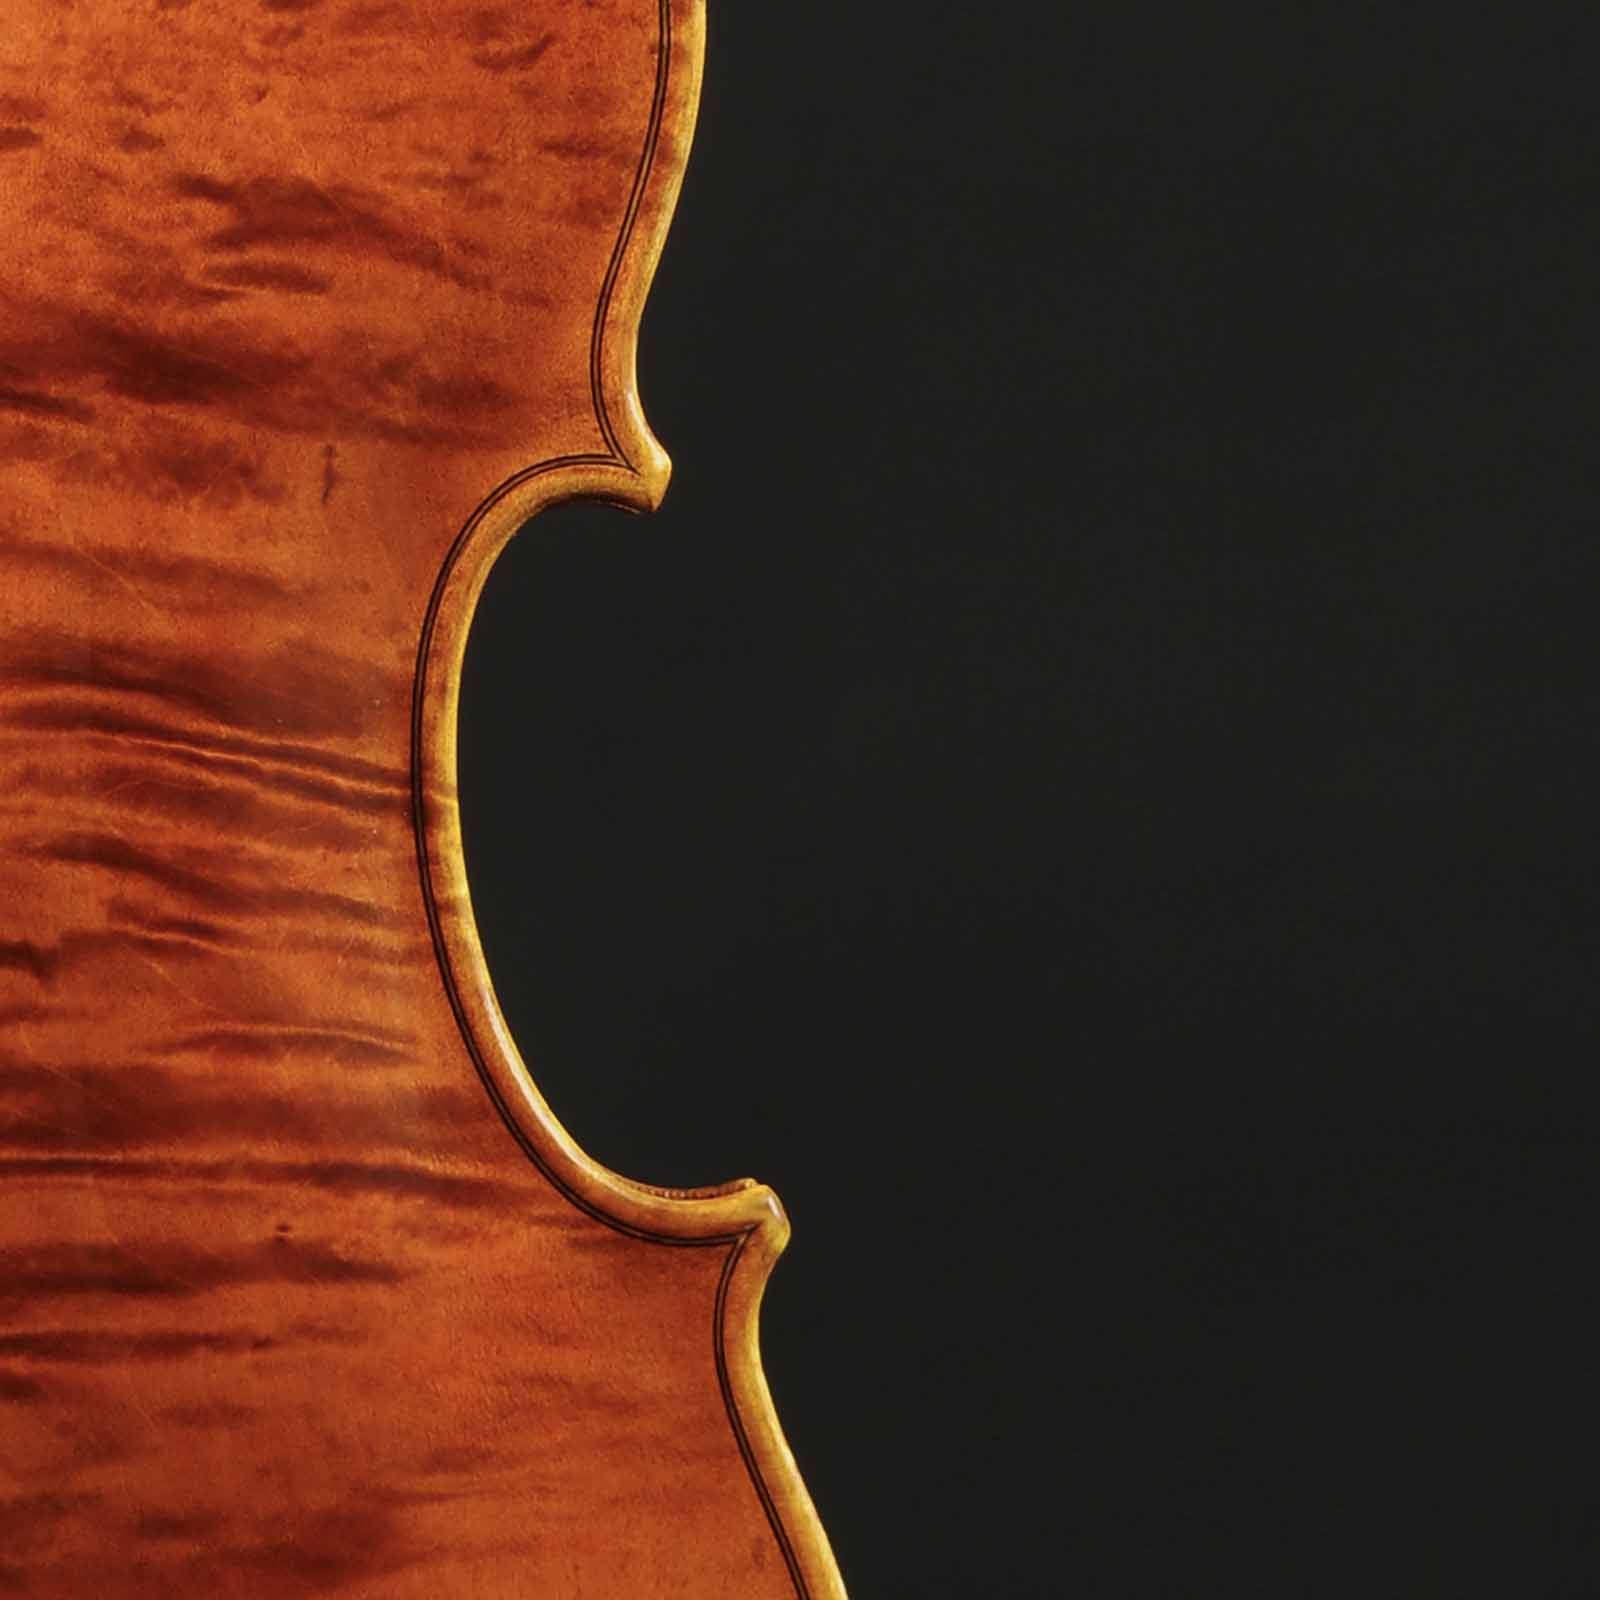 Antonio Stradivari Cremona 1715 “Sant'Agostino“ - Image 5